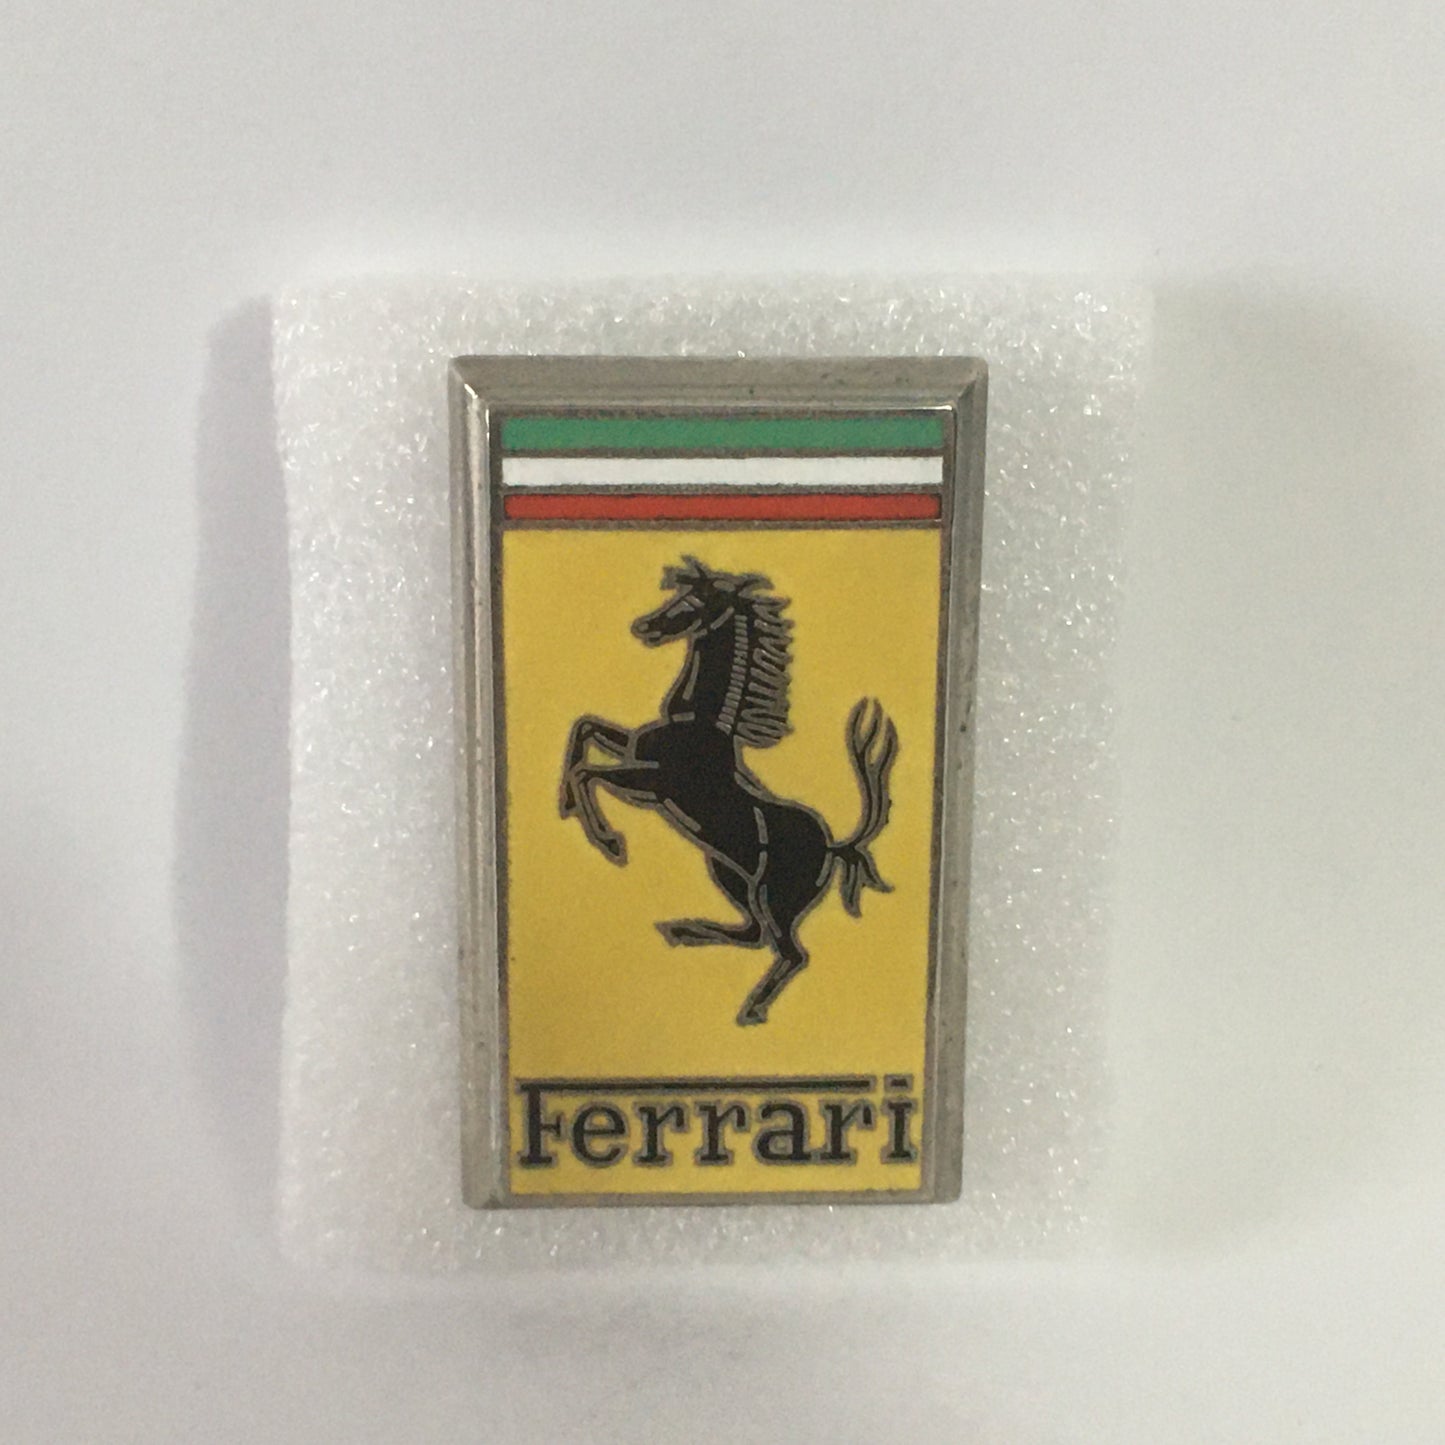 Ferrari, Original Ferrari Emblem in Metal with Enamel Finish and Screw Fixing, Excellent Condition